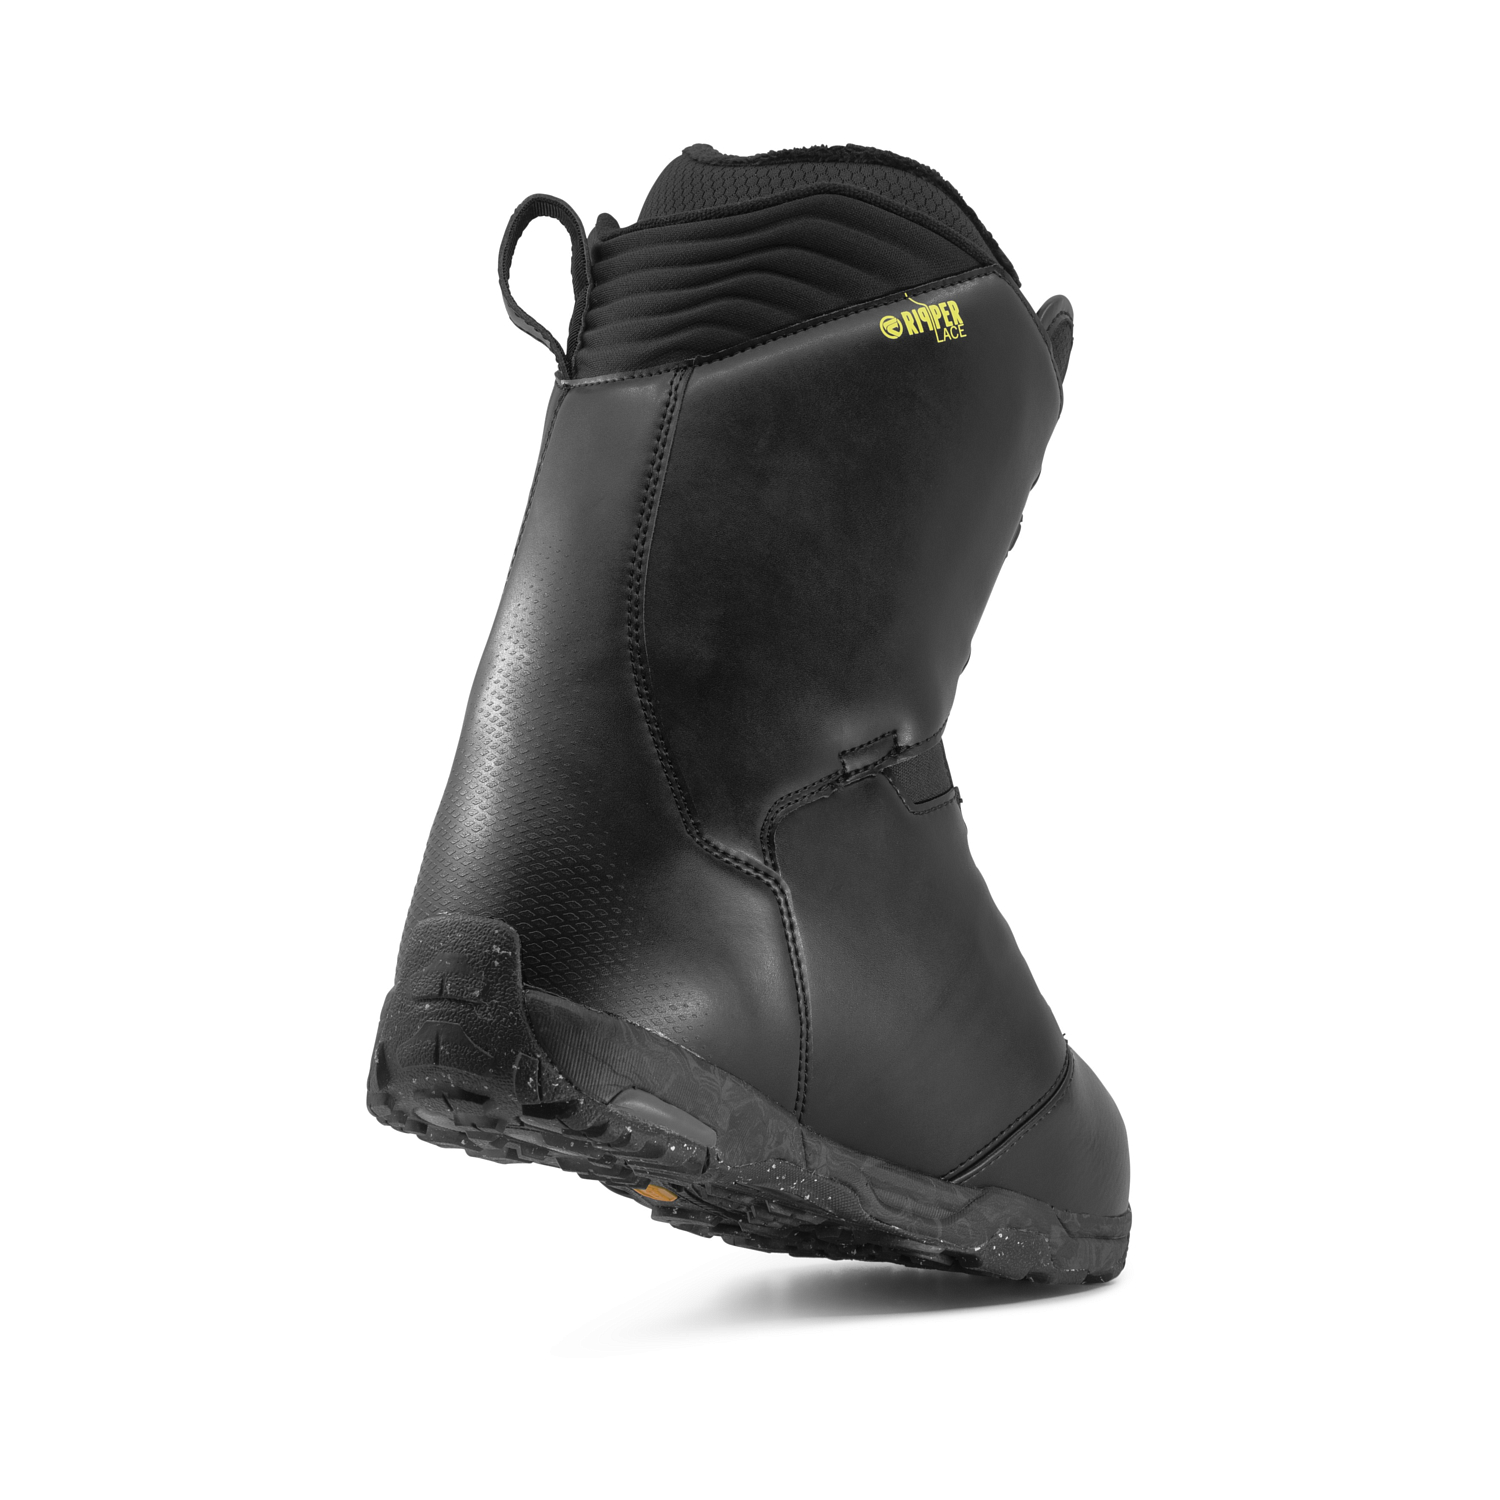 Ботинки для сноуборда NIDECKER 2019-20 Hylite Black